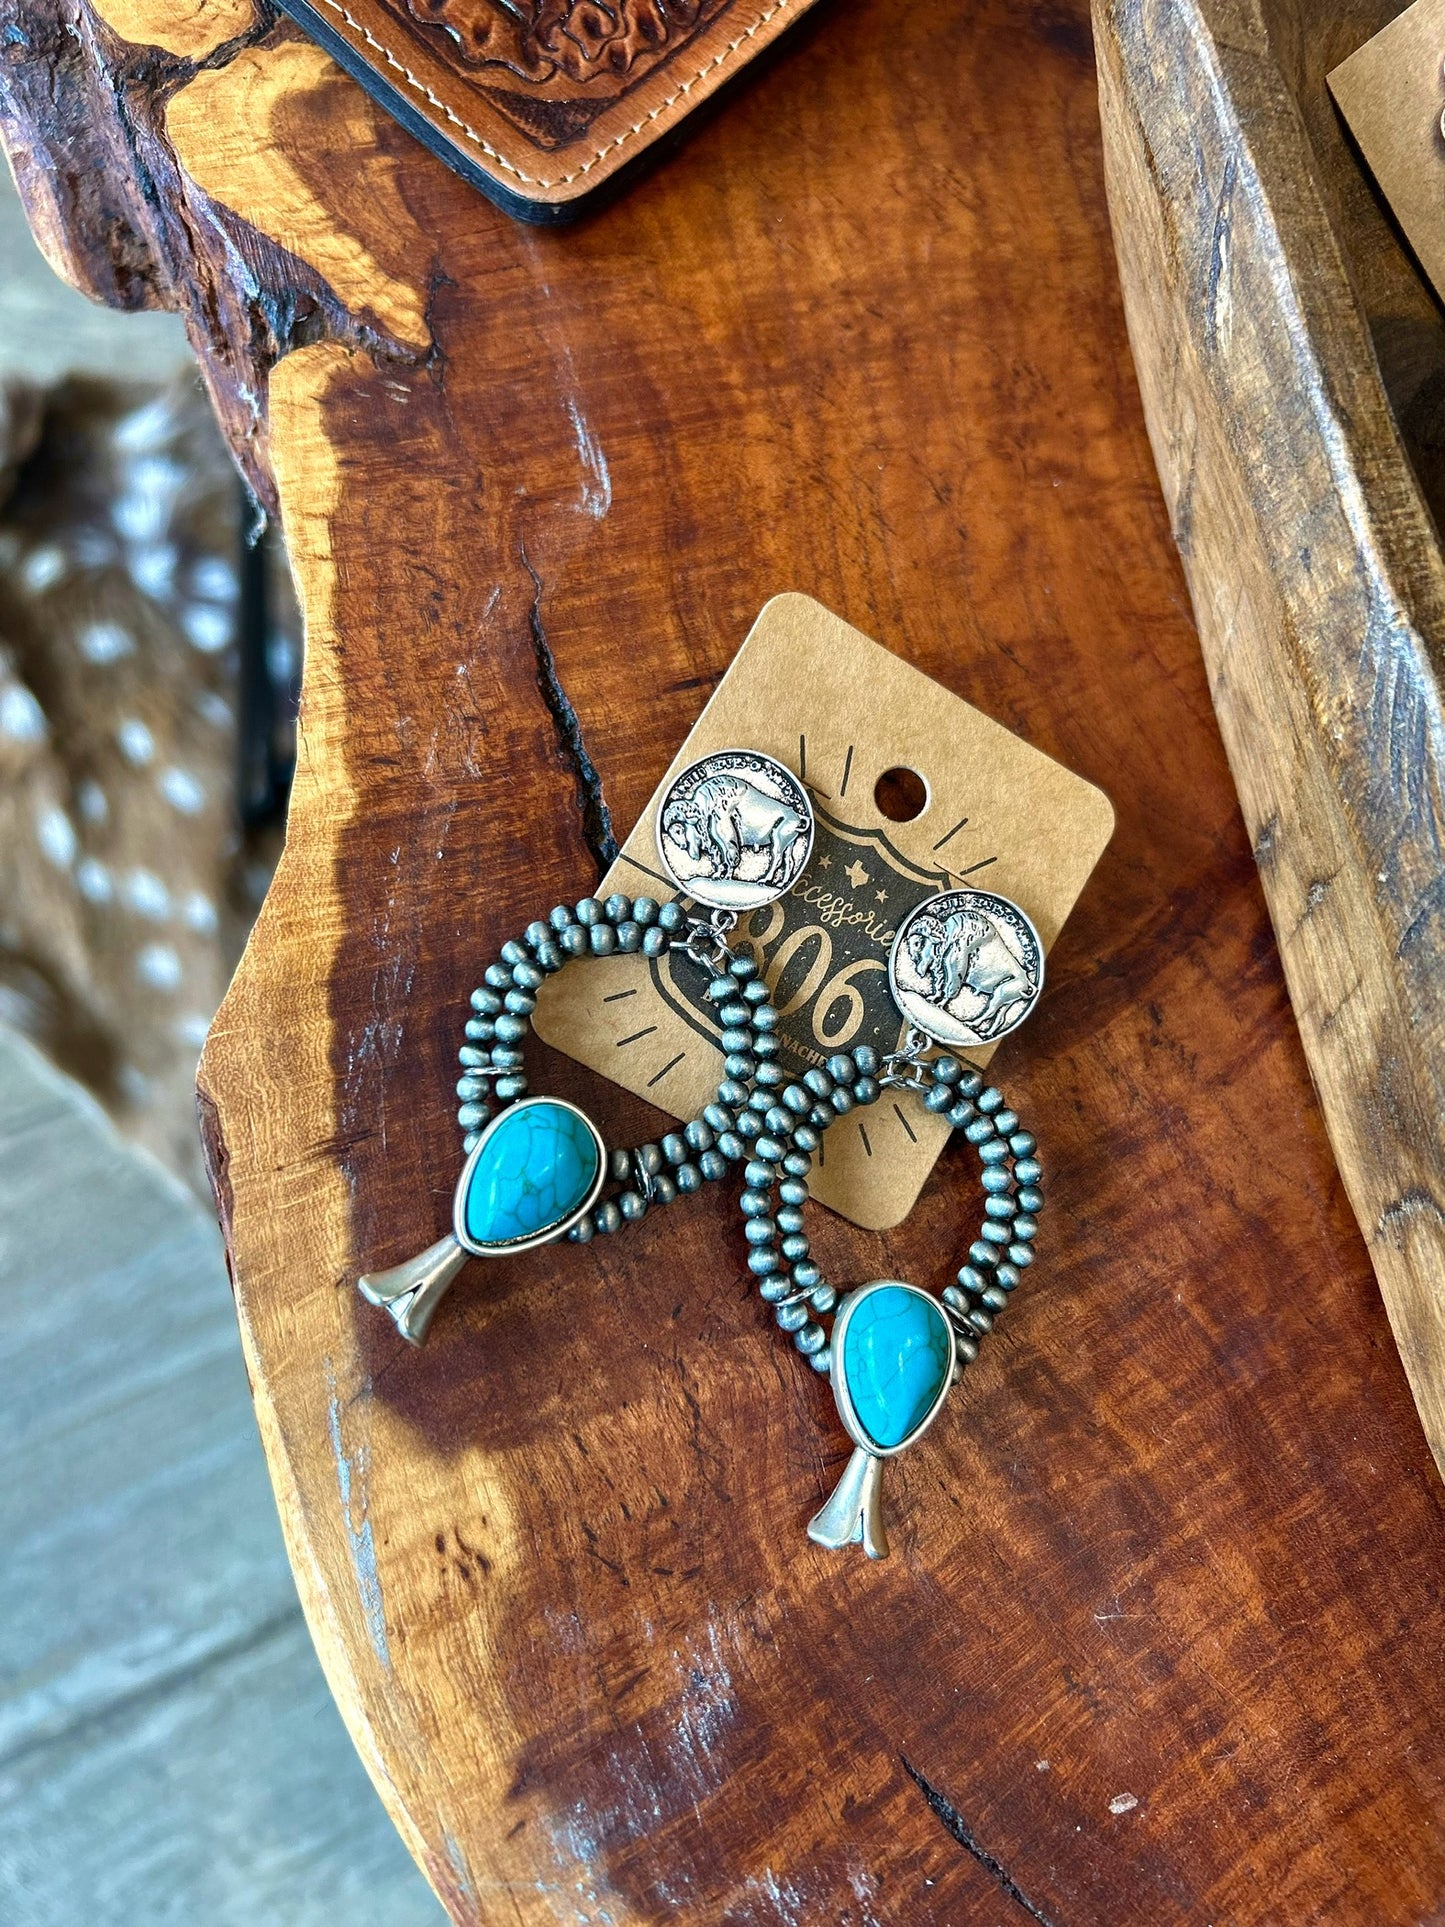 The Bella Buffalo earrings